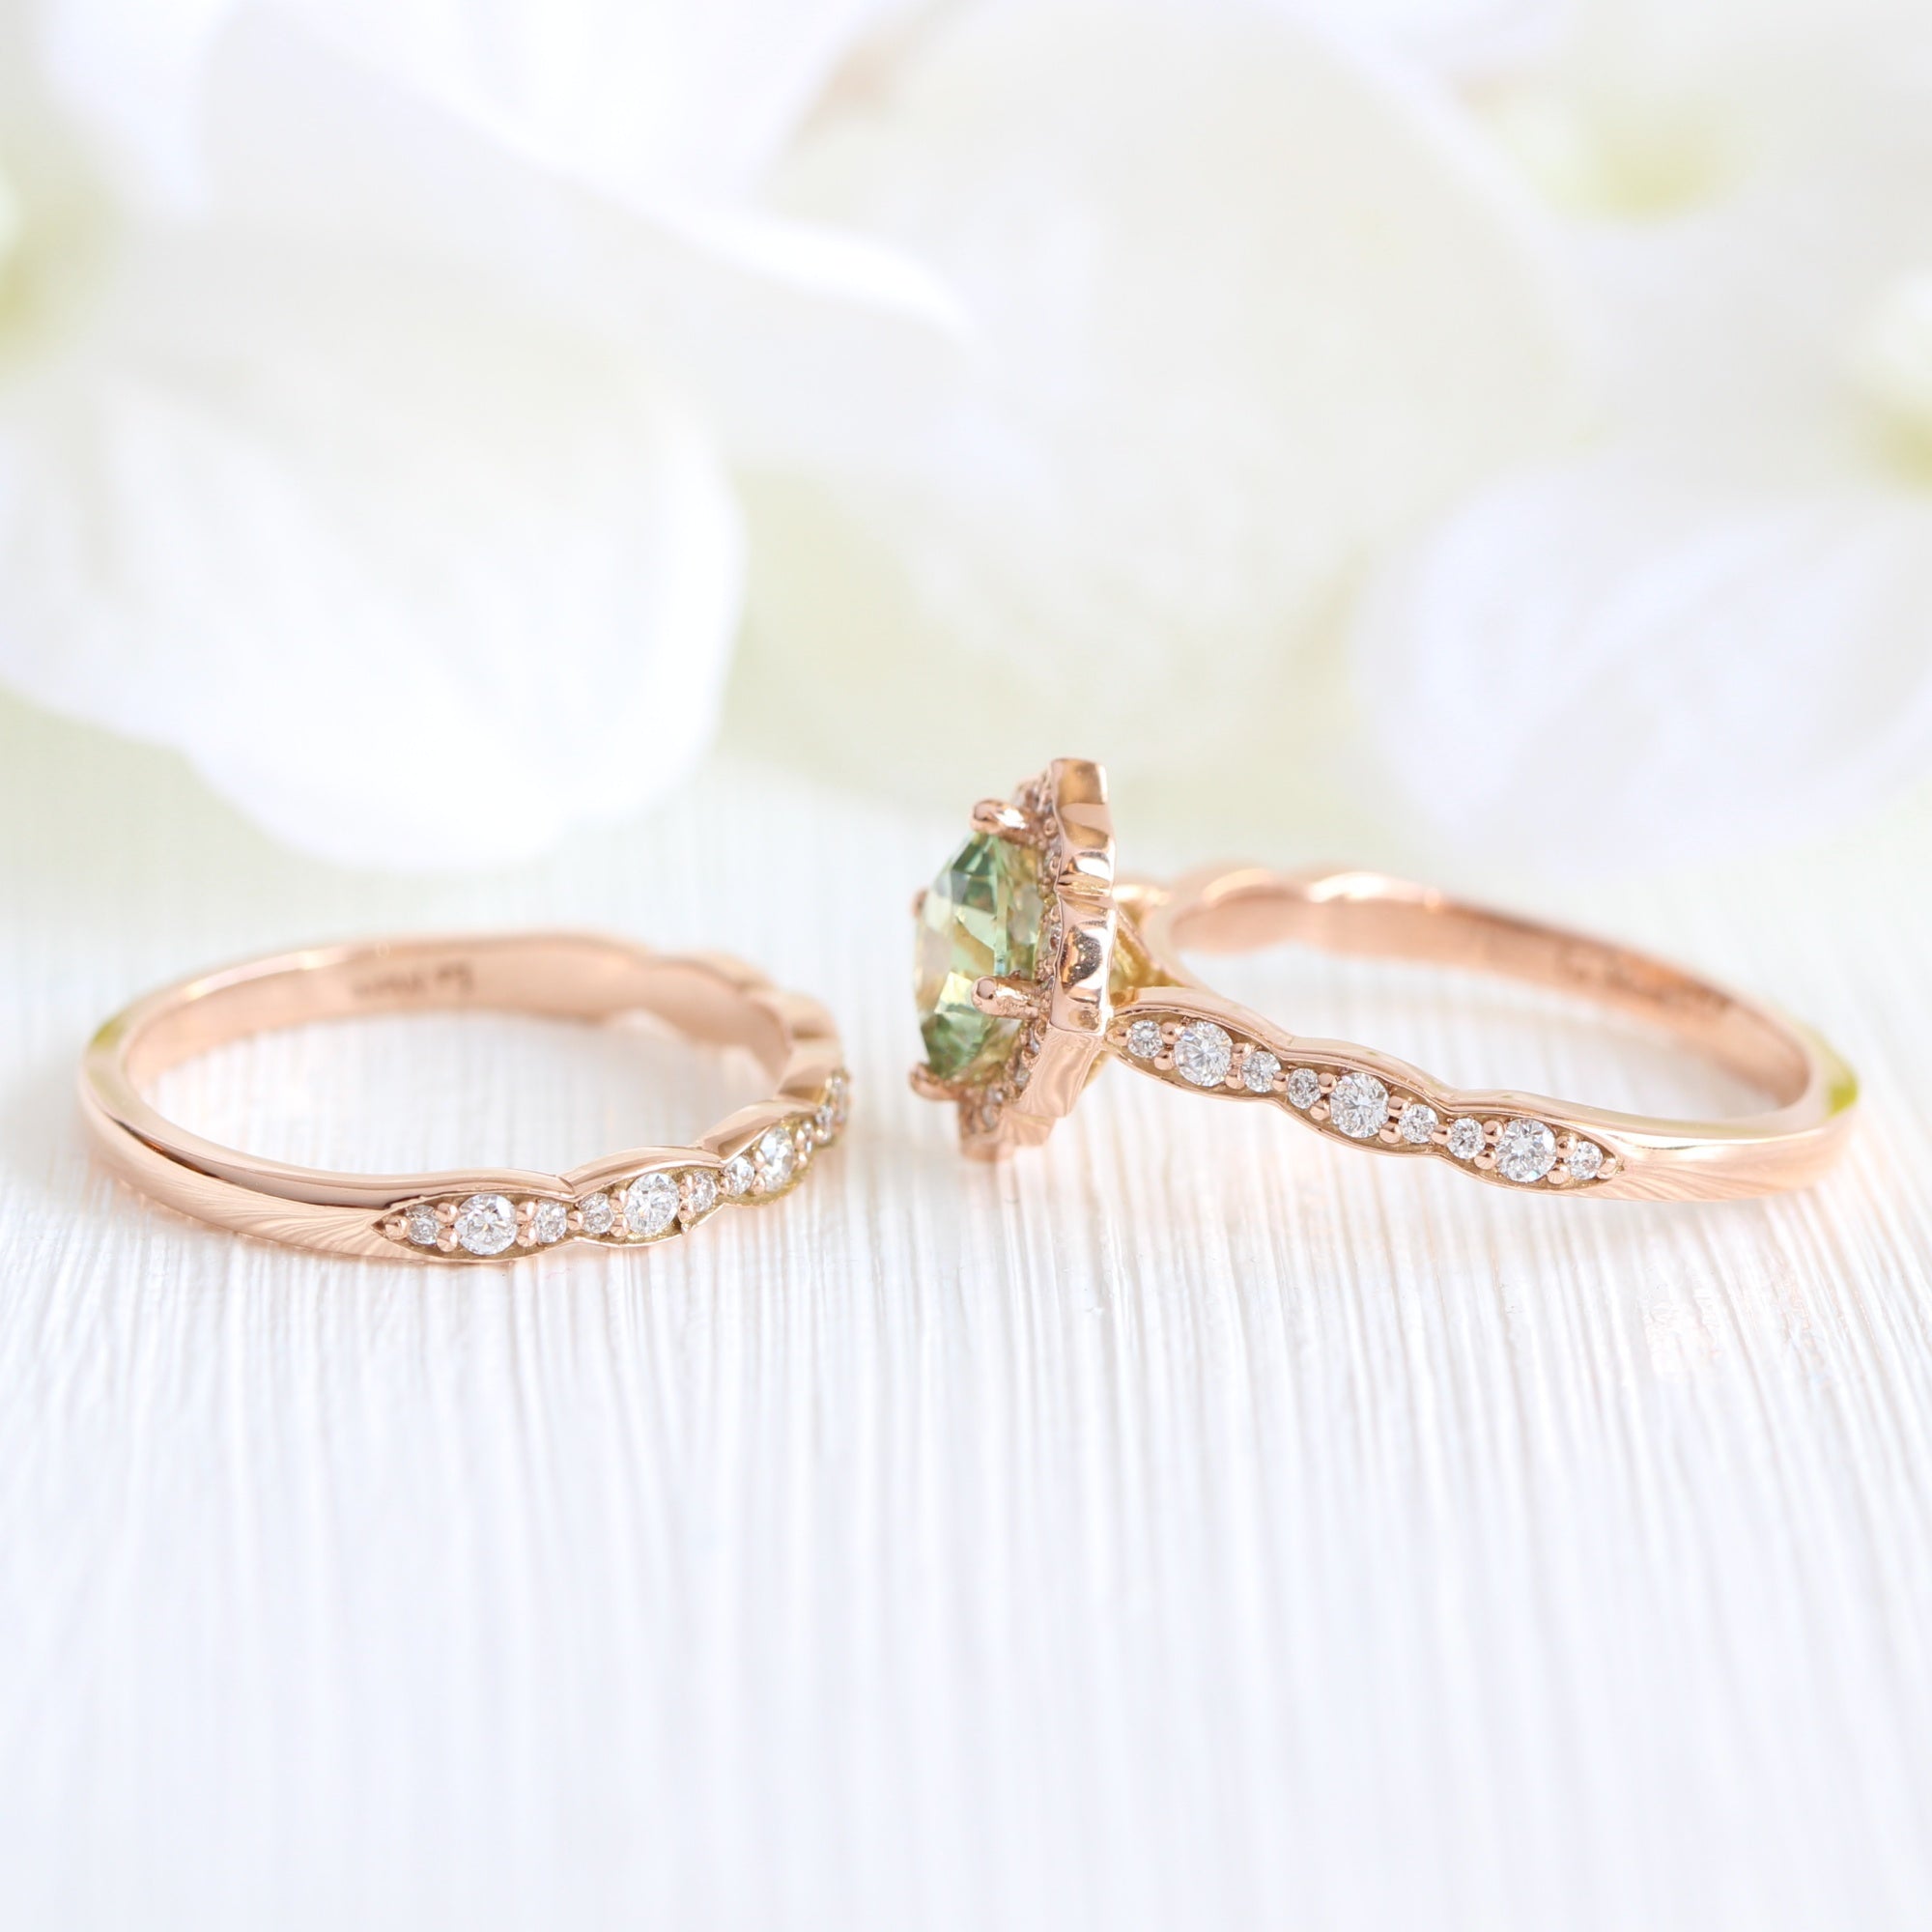 Cushion green sapphire ring rose gold matching diamond wedding band la more design jewelry